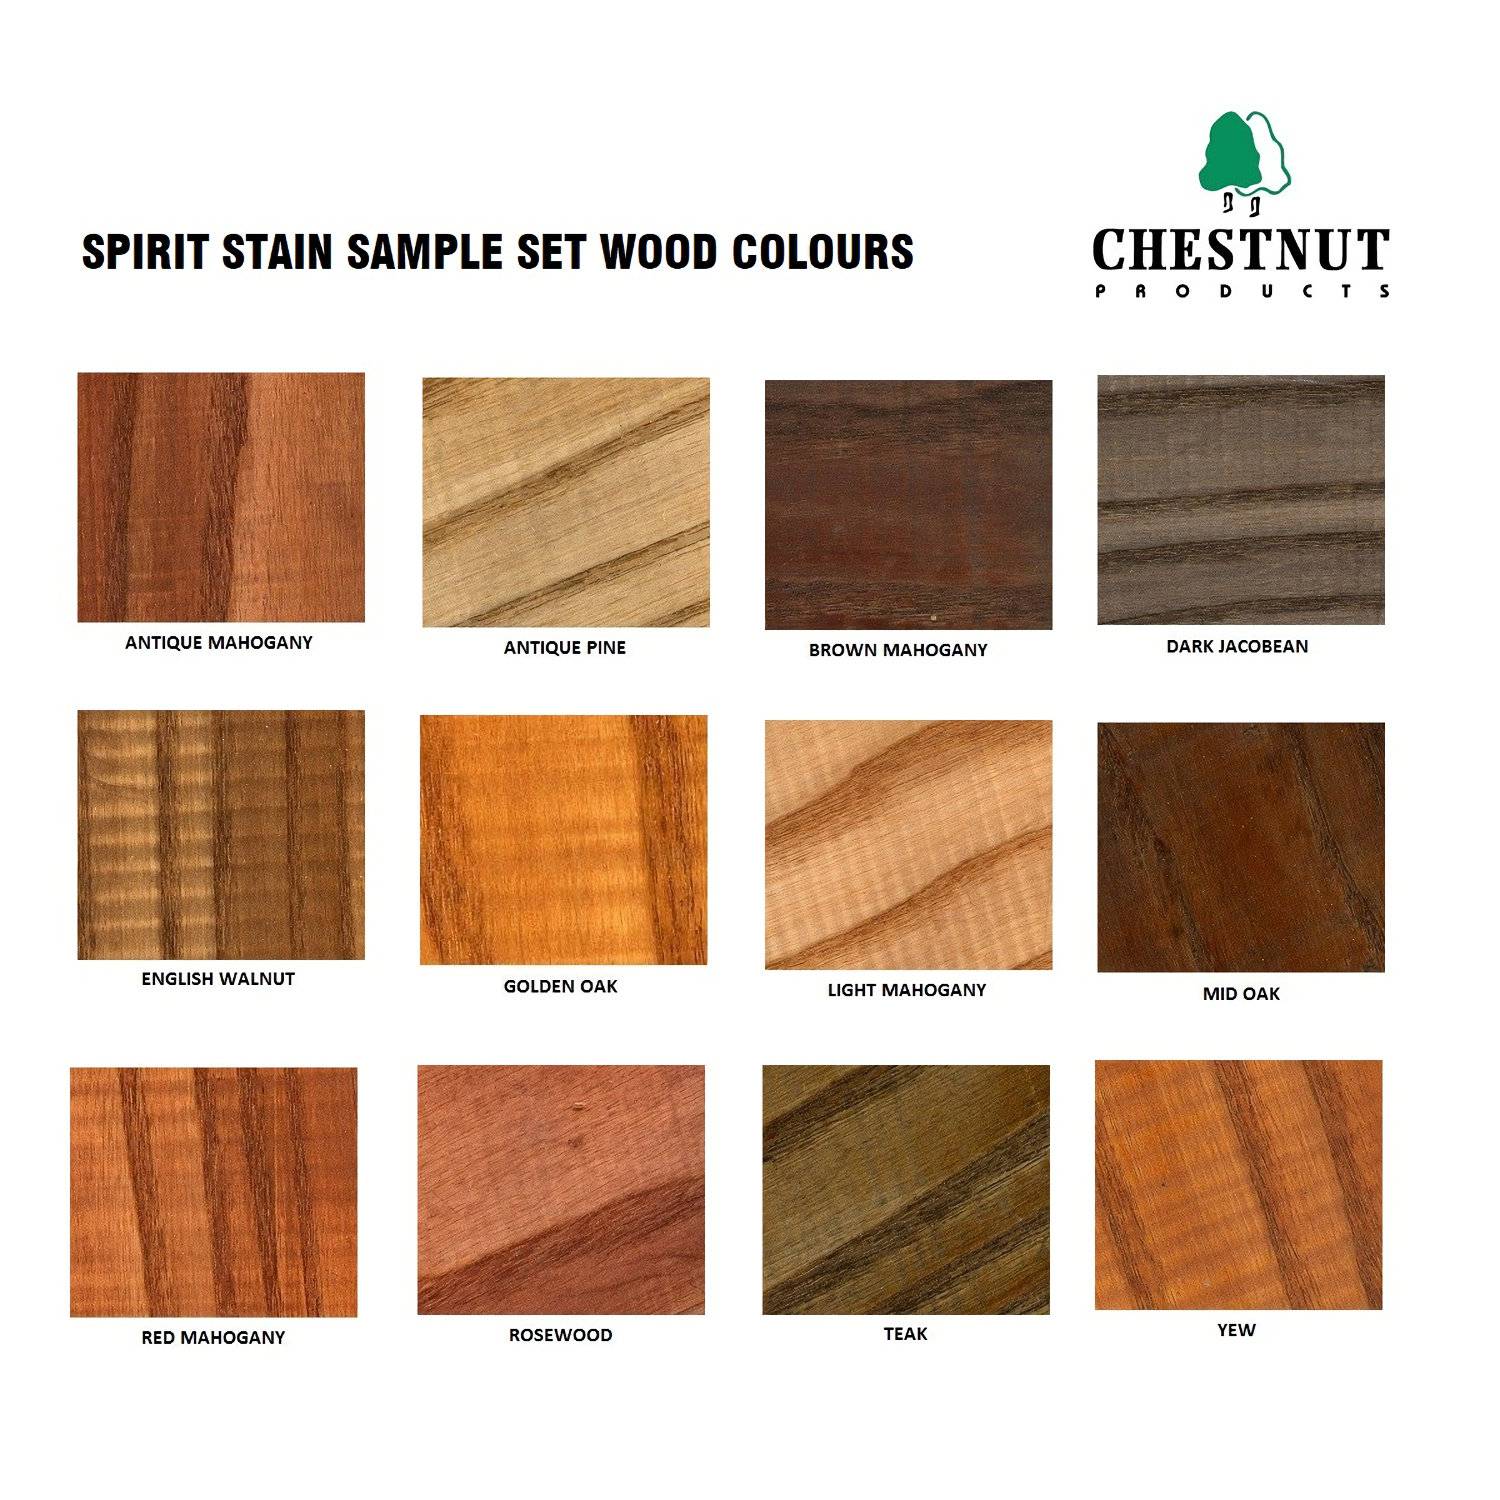 spirit stain sample set wood colours